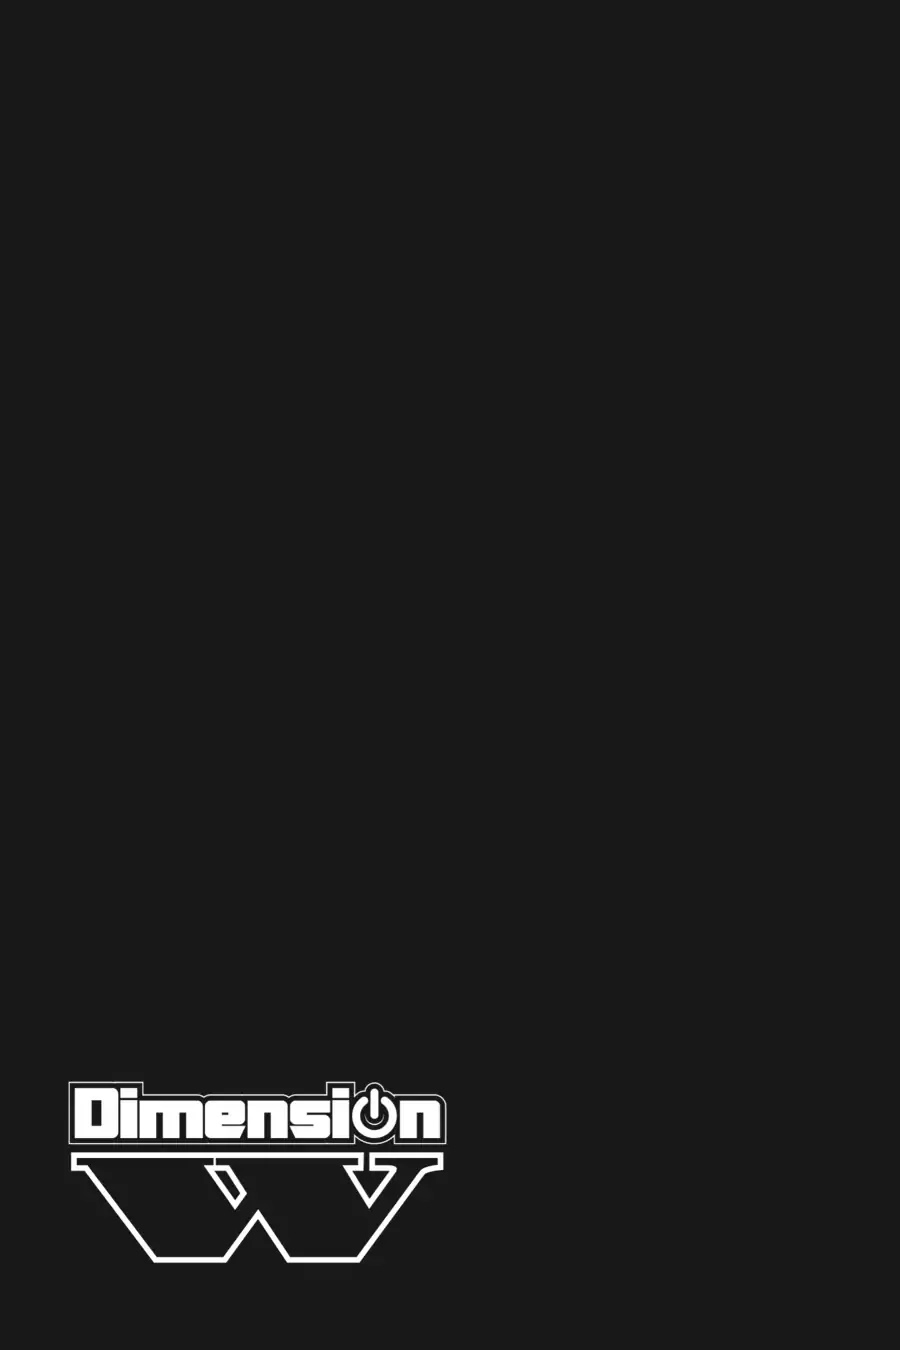 dimension_w_75_21